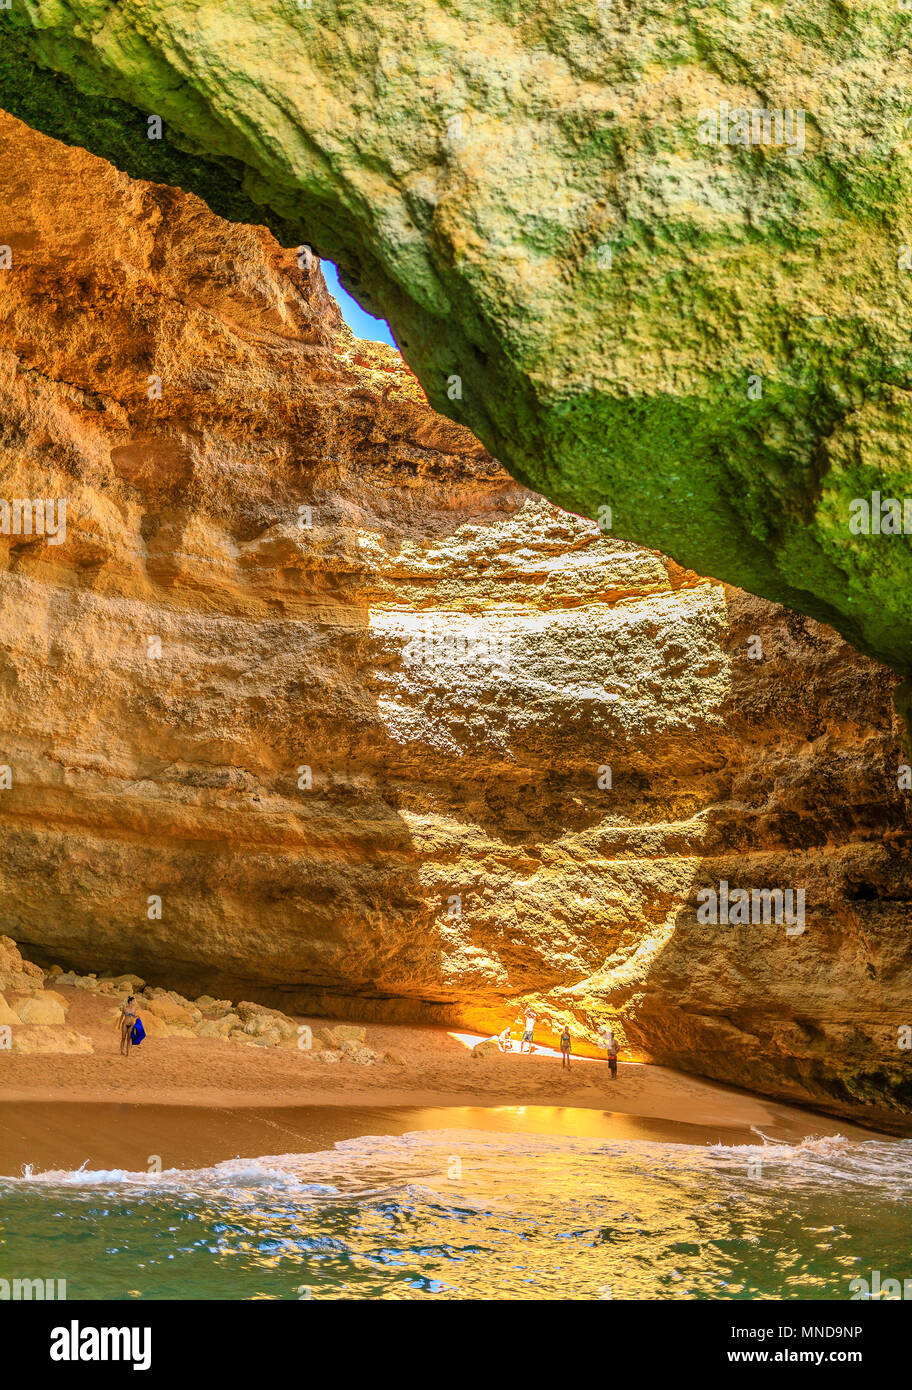 Benagil cave, the most famous cavern in Algarve, Portugal Stock Photo